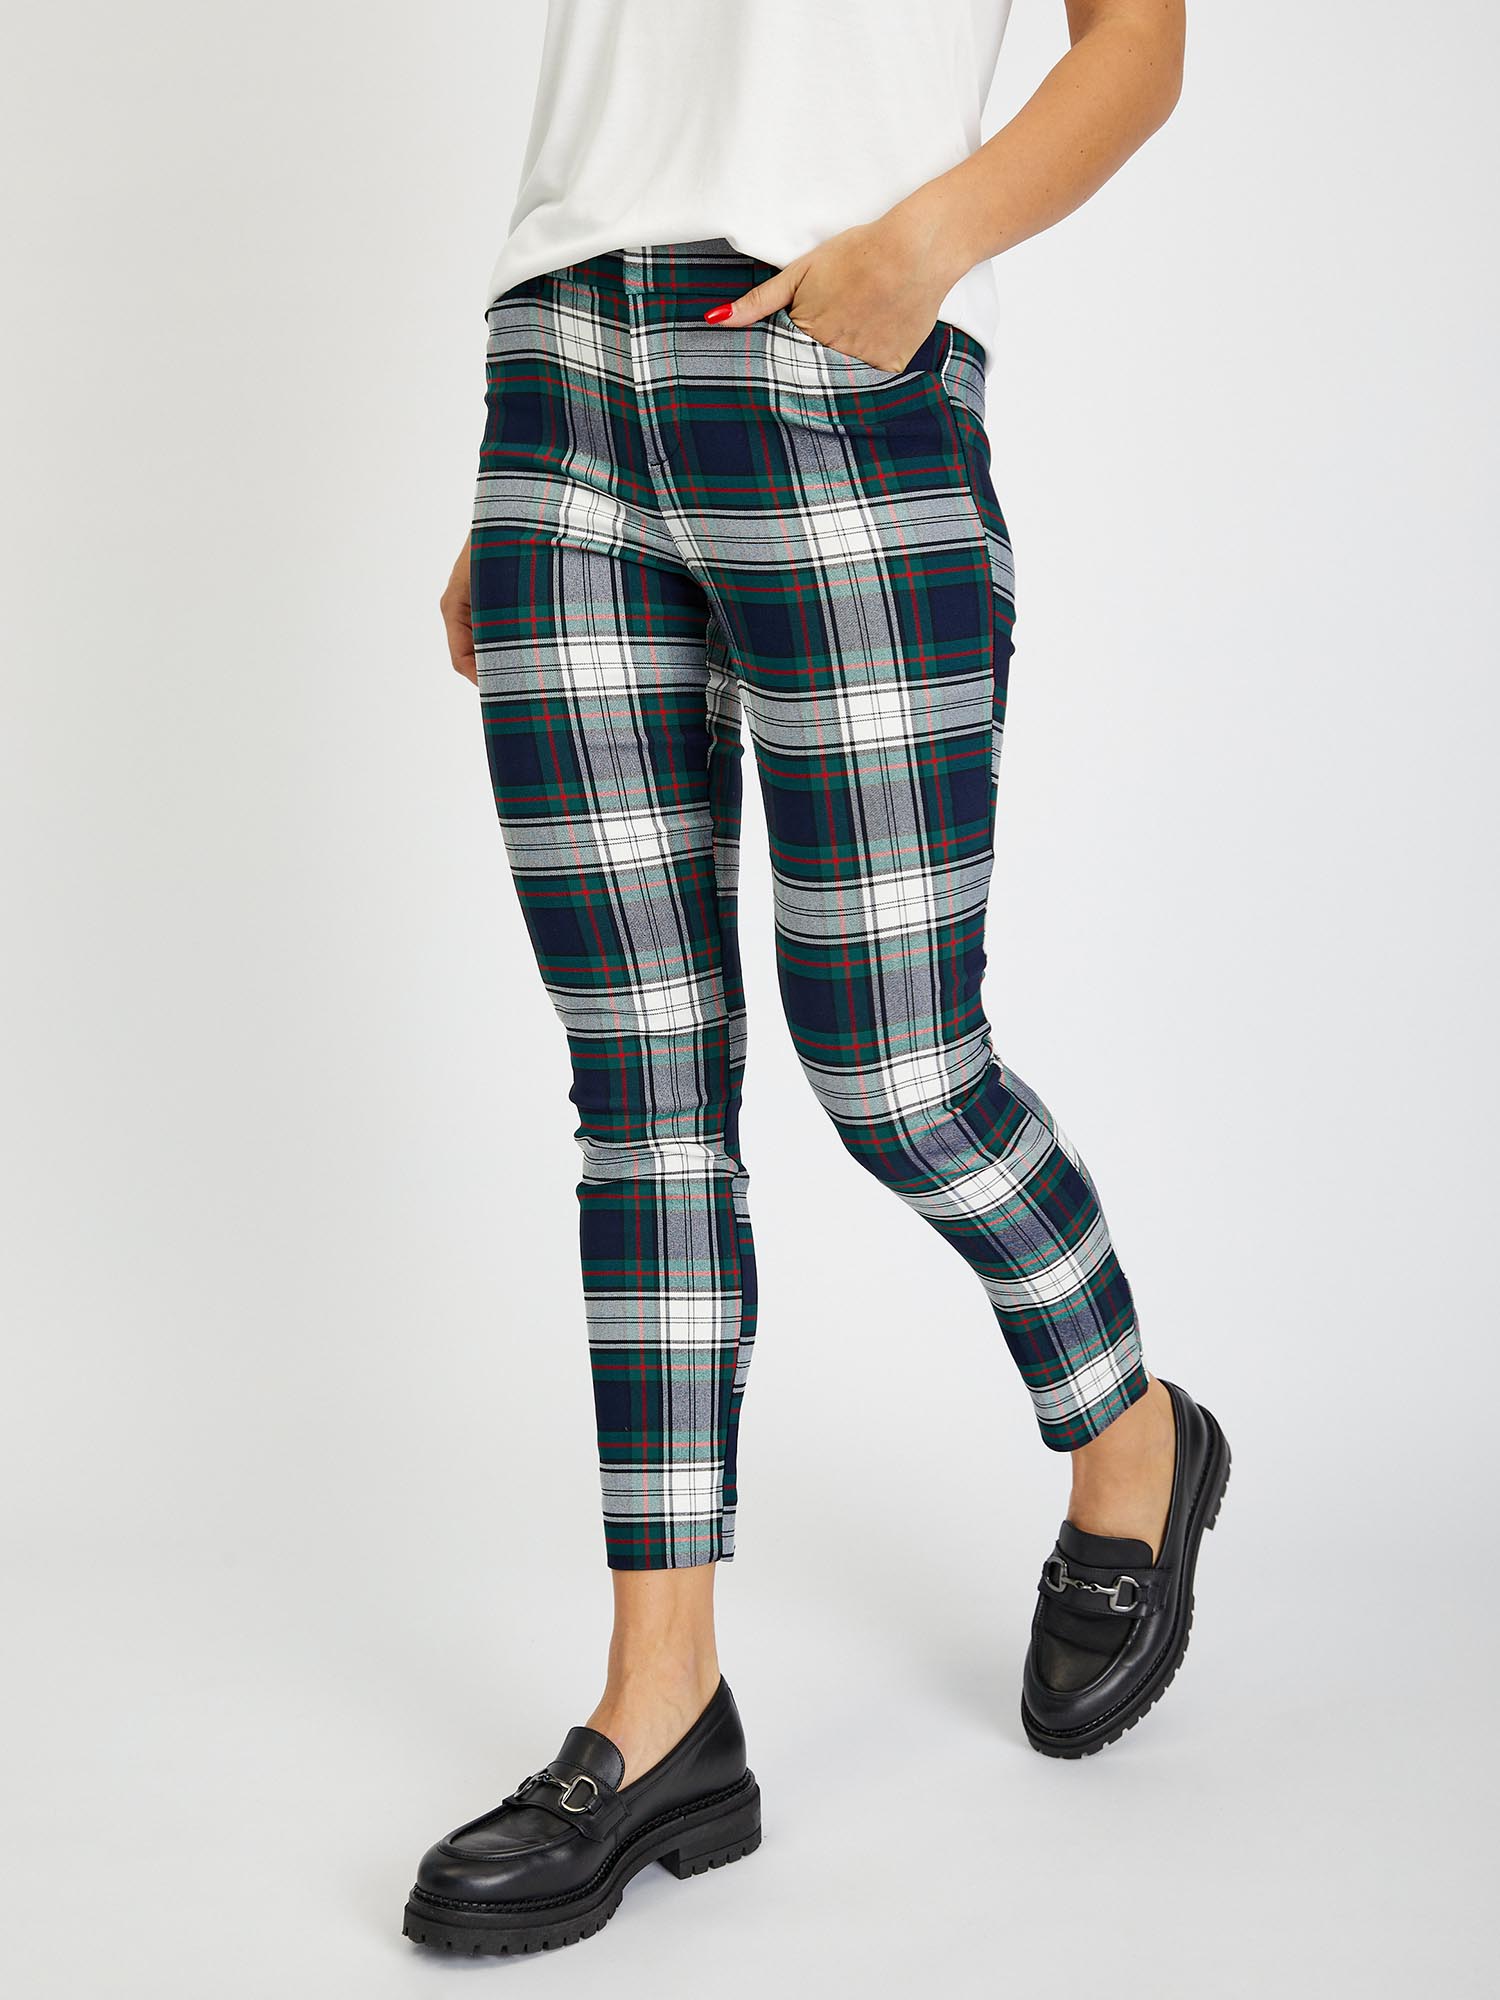 GAP Checkered Skinny Bi-Stretch Trousers - Women